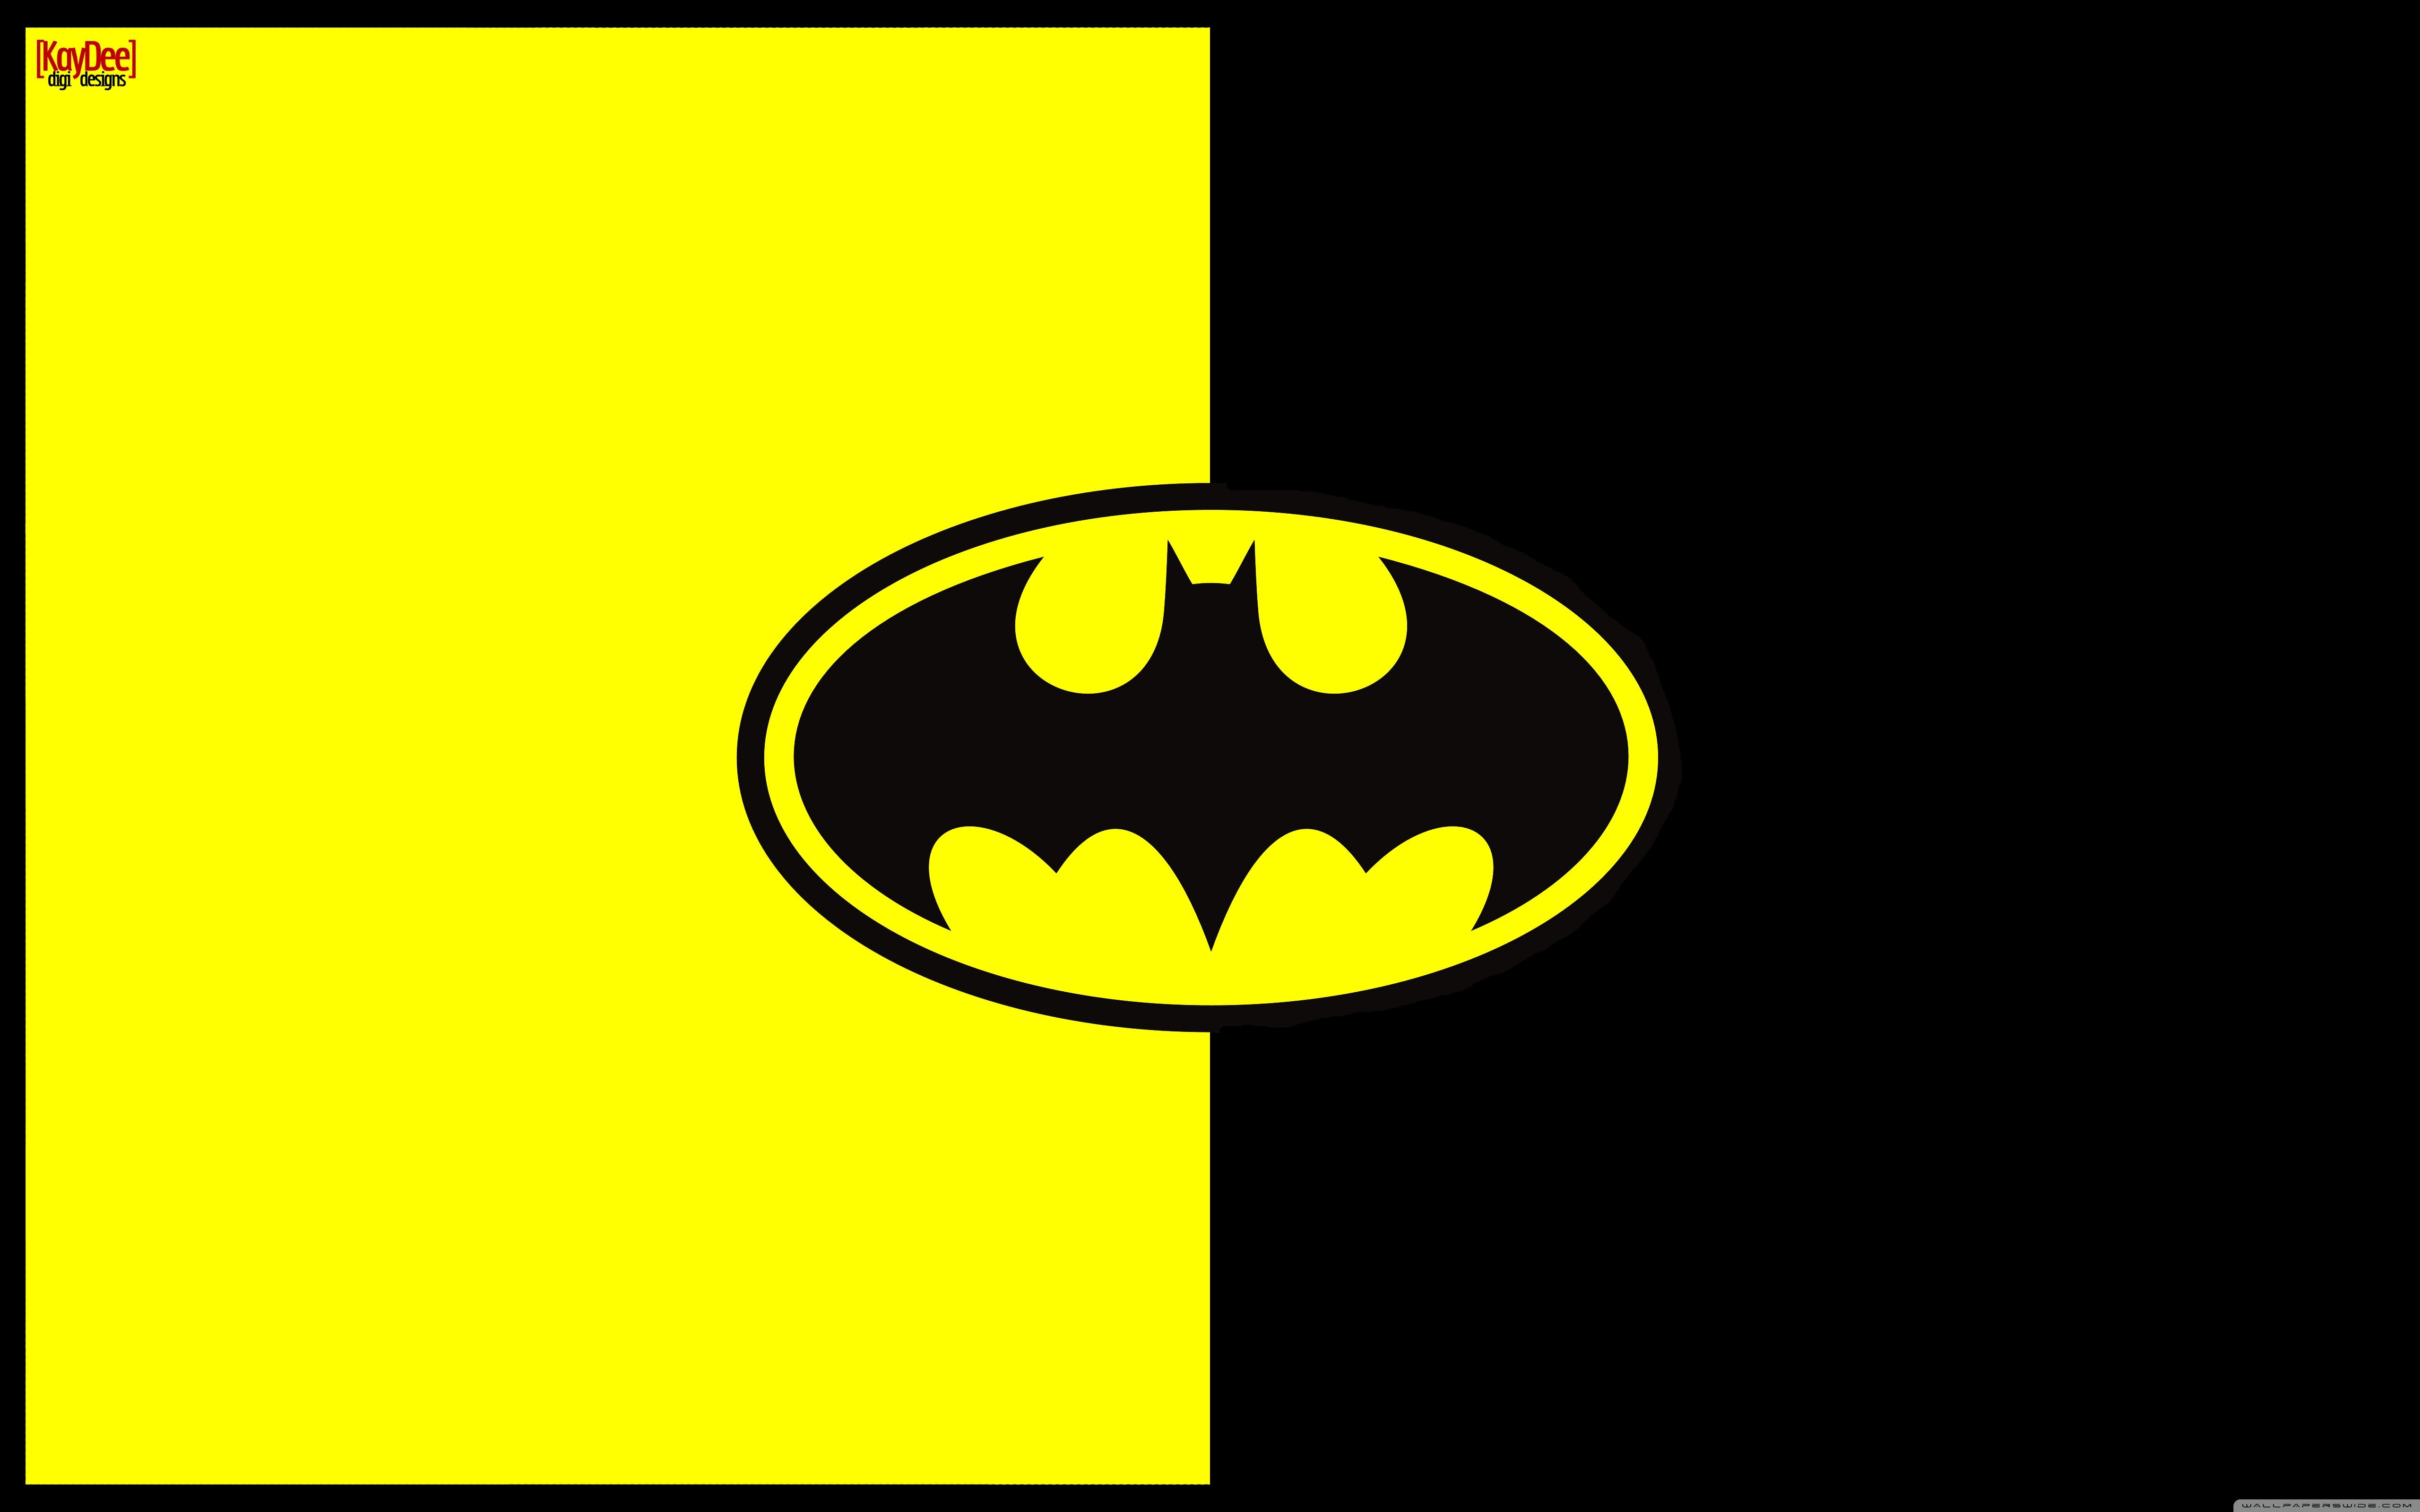 Batman logo wallpaper Logospike.com Famous and Free Vector Logos